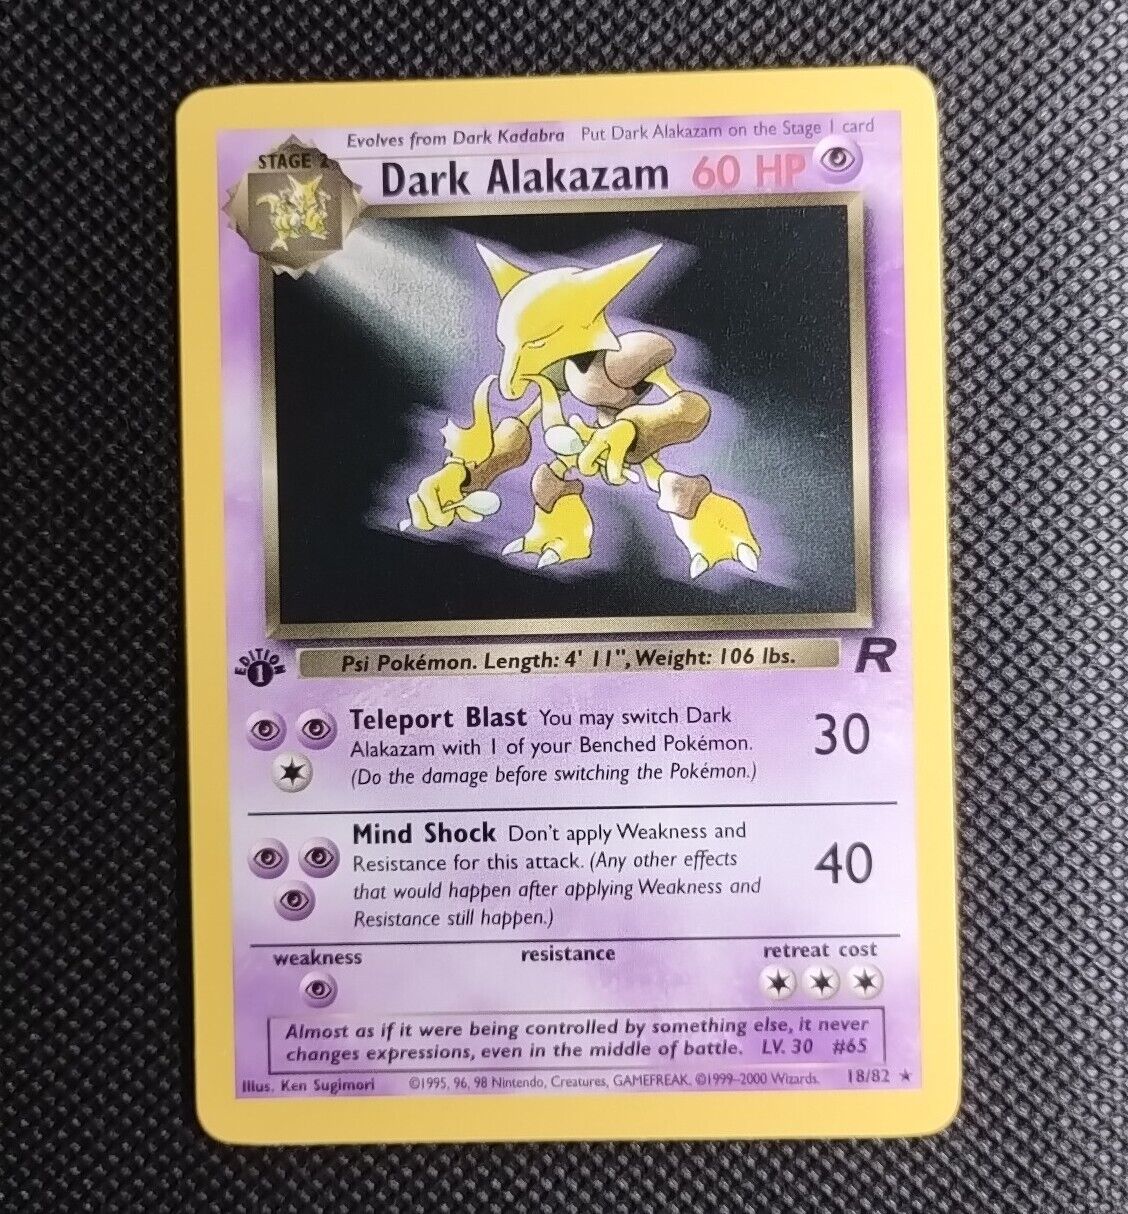 Dark Alakazam 1st Edition Team Rocket Rare Pokemon Card 18/82 WOTC - Near Mint